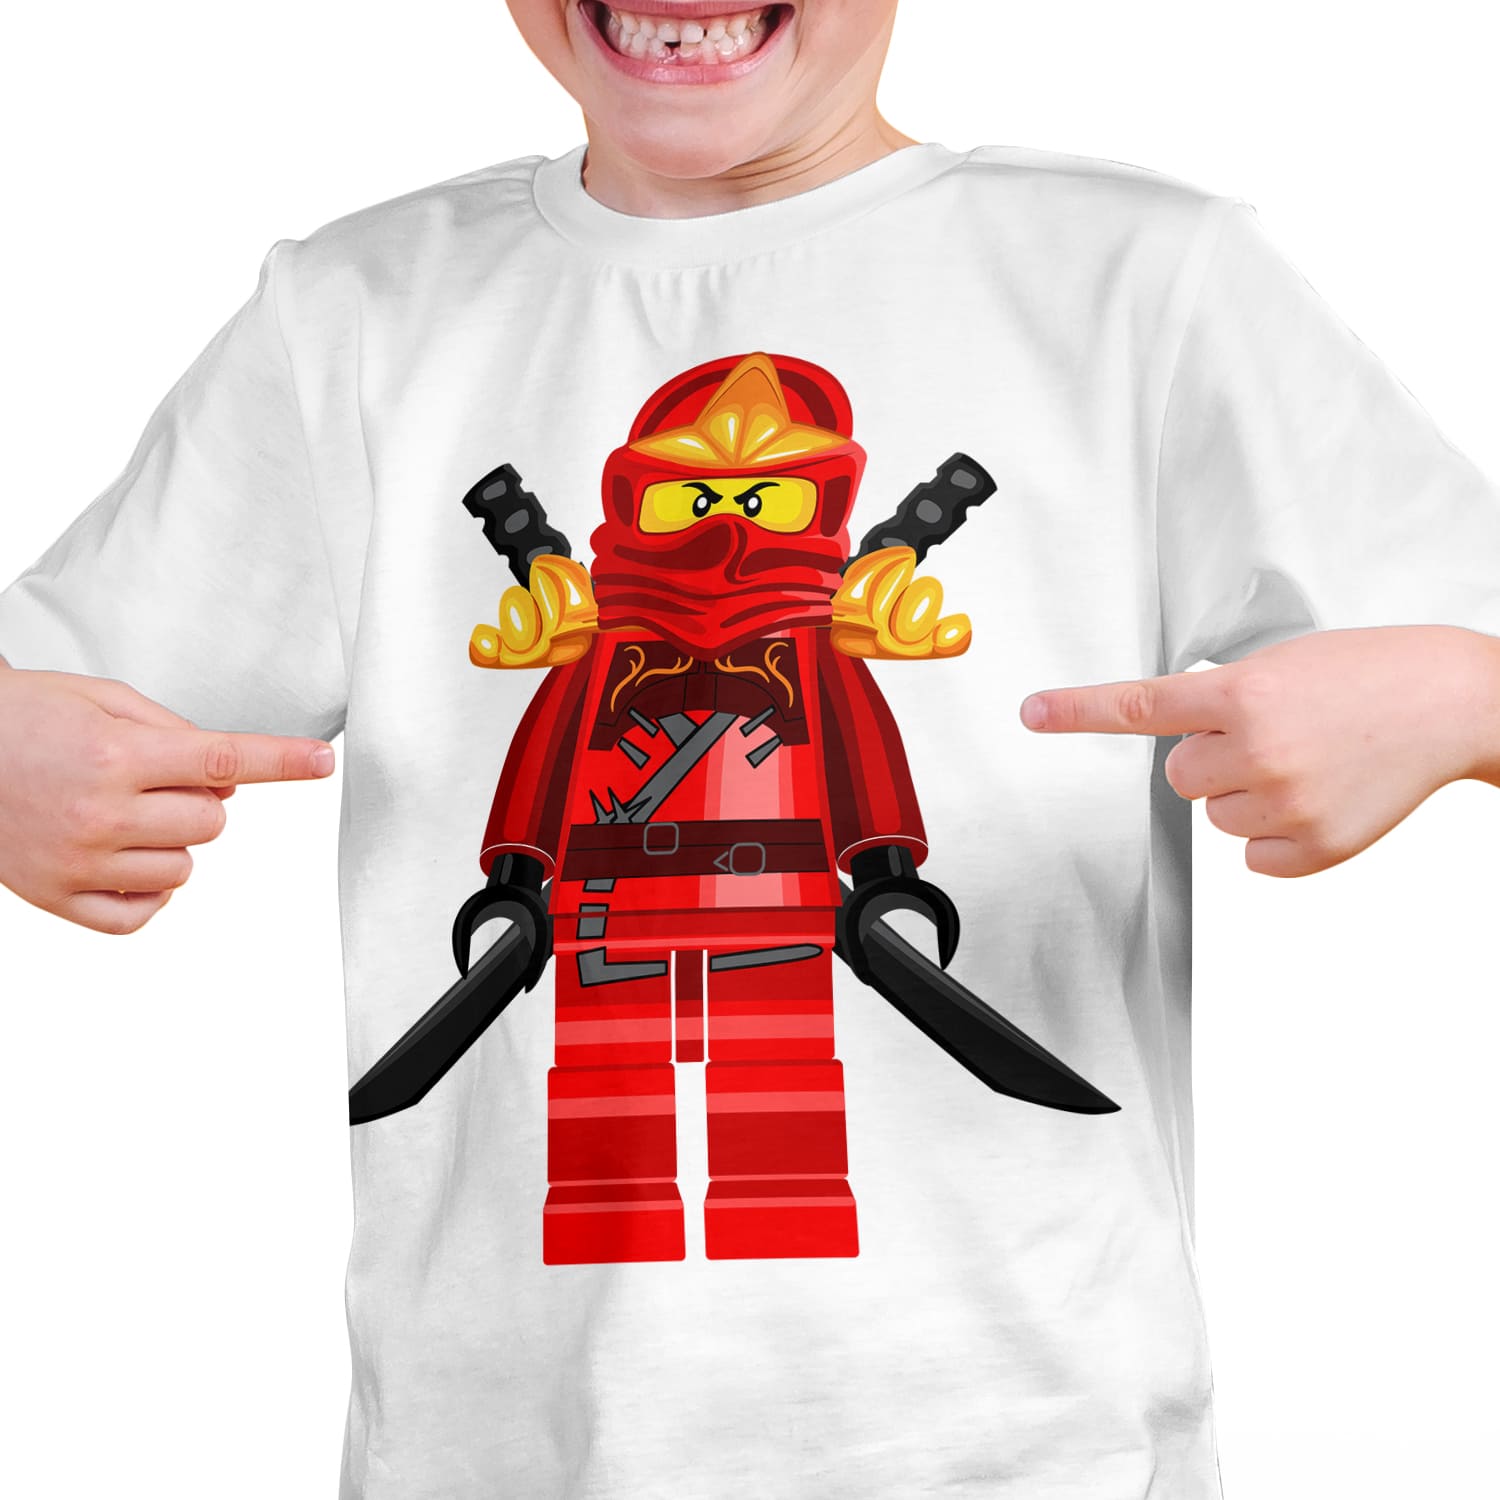 Lego ninjago svg design on the t-shirt.